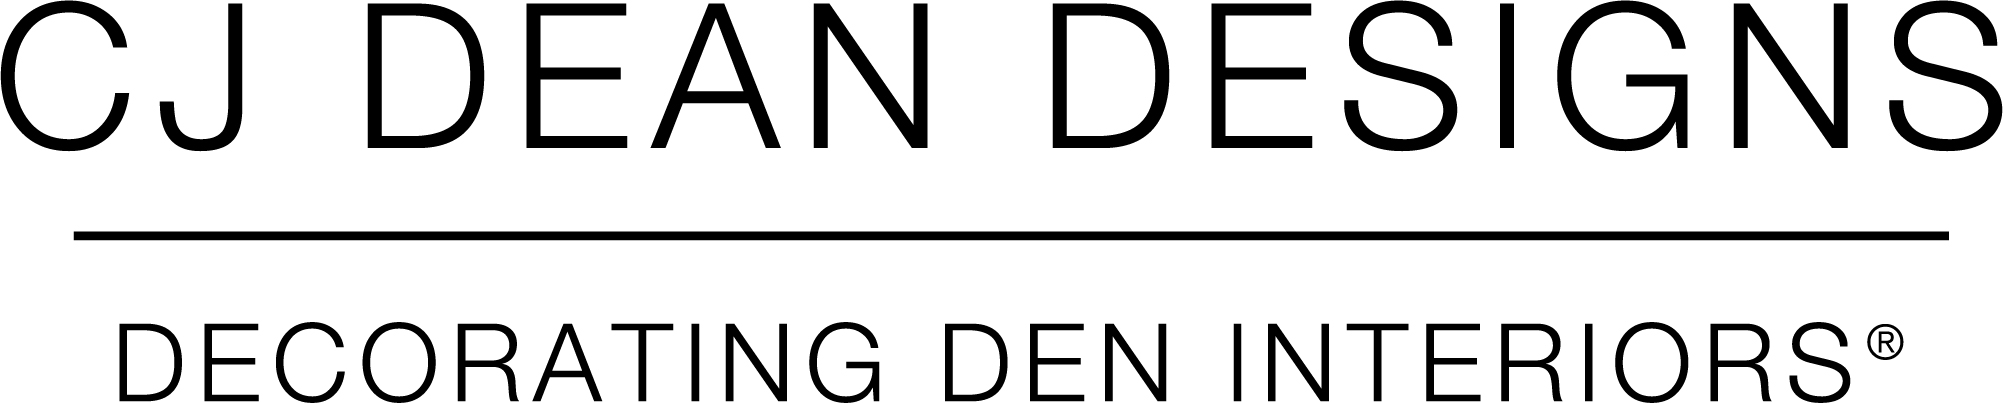 CJ Dean Designs/Decorating Den Interiors Logo